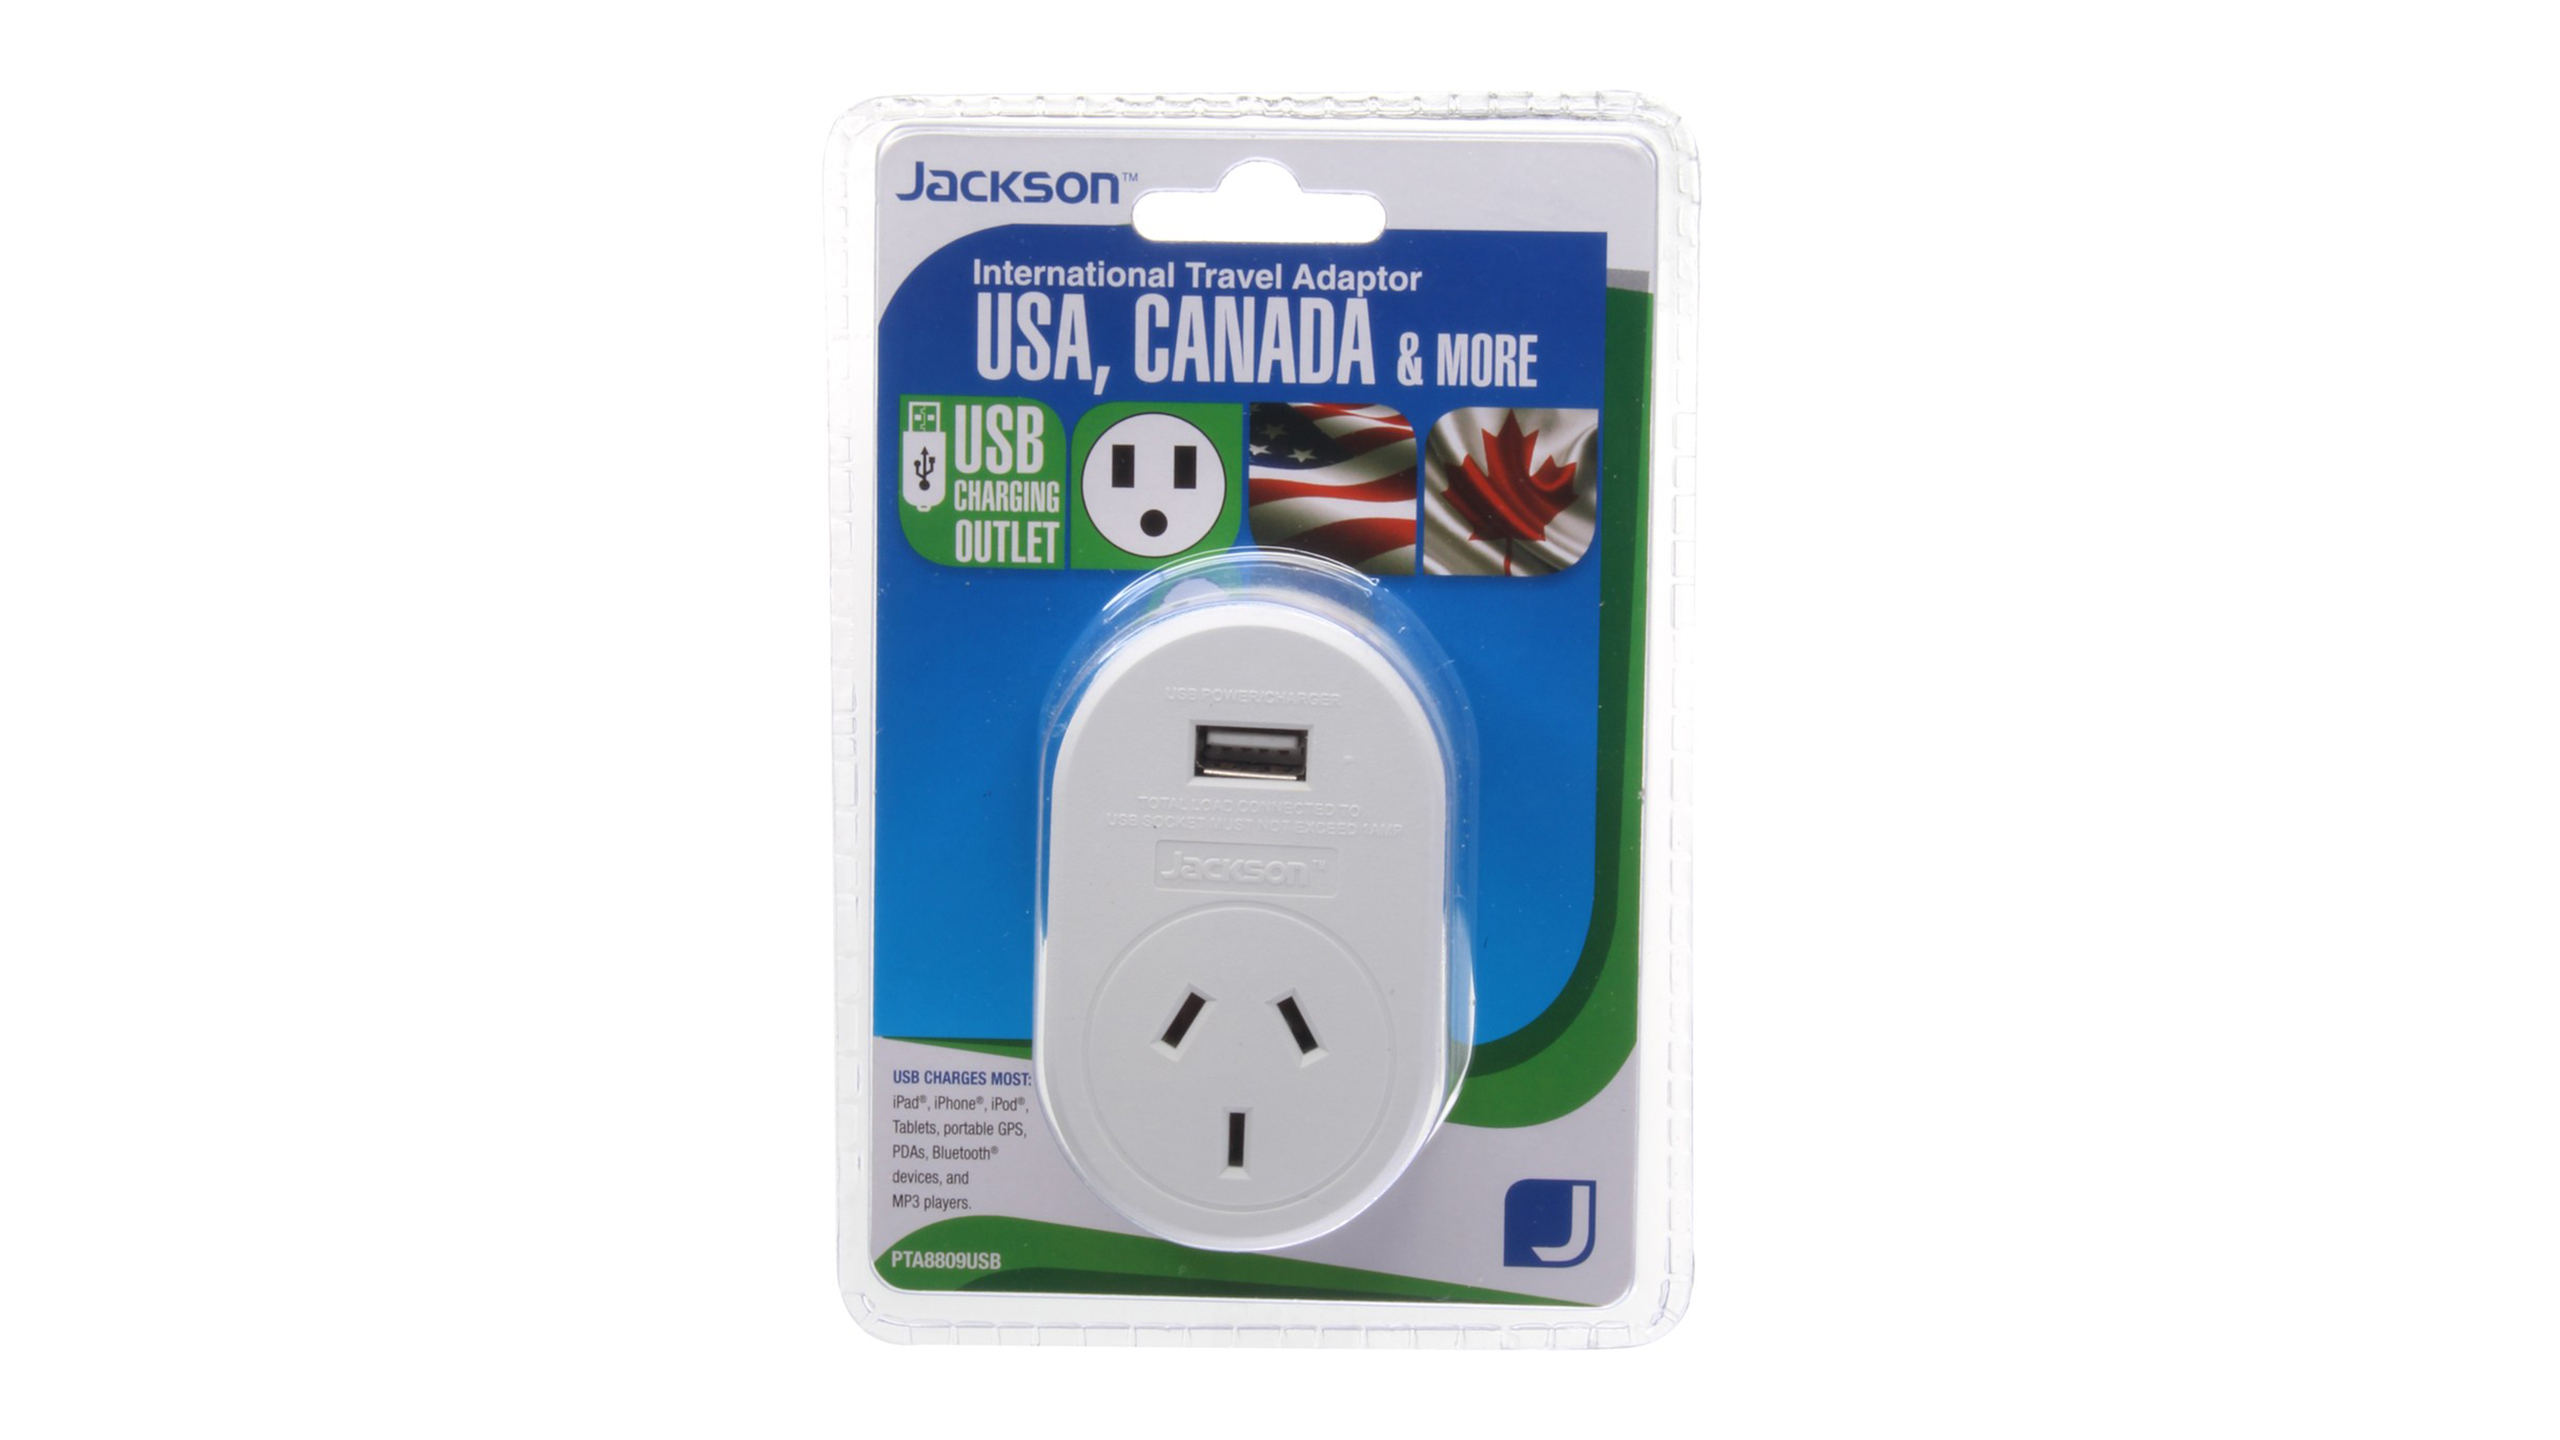 Jackson International Travel Adapter w/ USB Port Outbound USA Canada & More